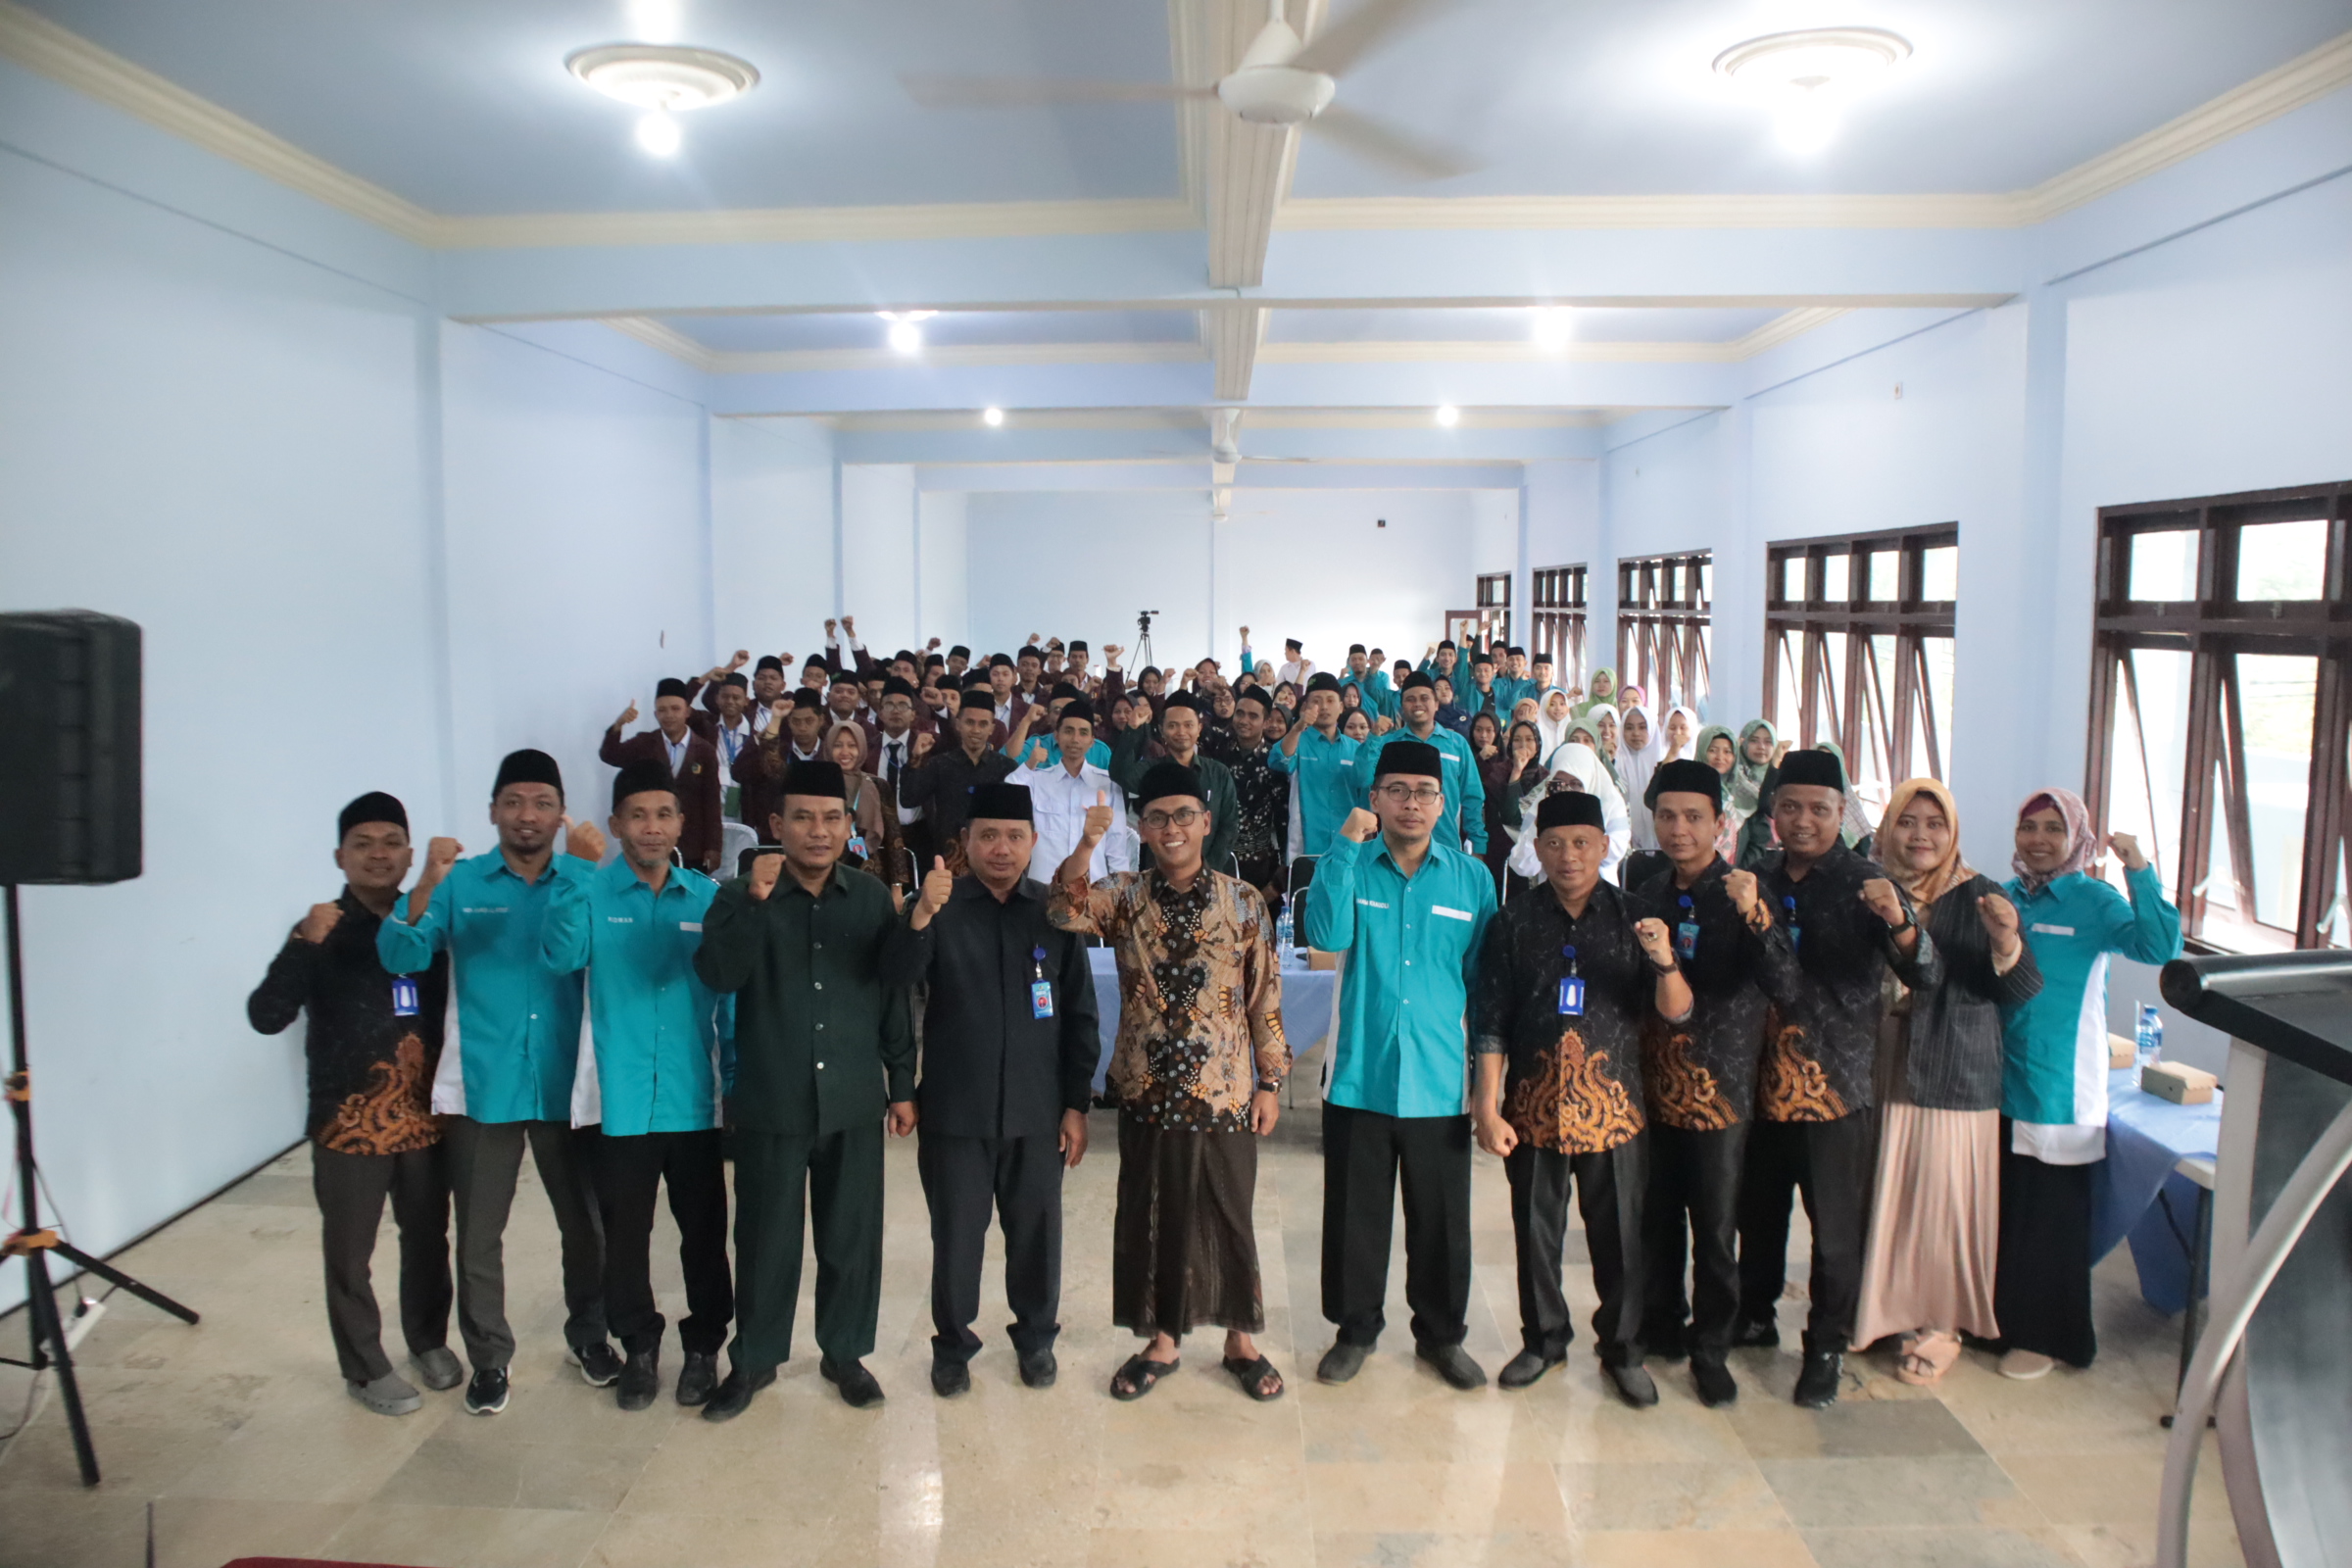 STIT Darul Ishlah Tulang Bawang Lampung Bencmarking and Visiting Lecturer di IAI Darussalam Blokagung Banyuwangi